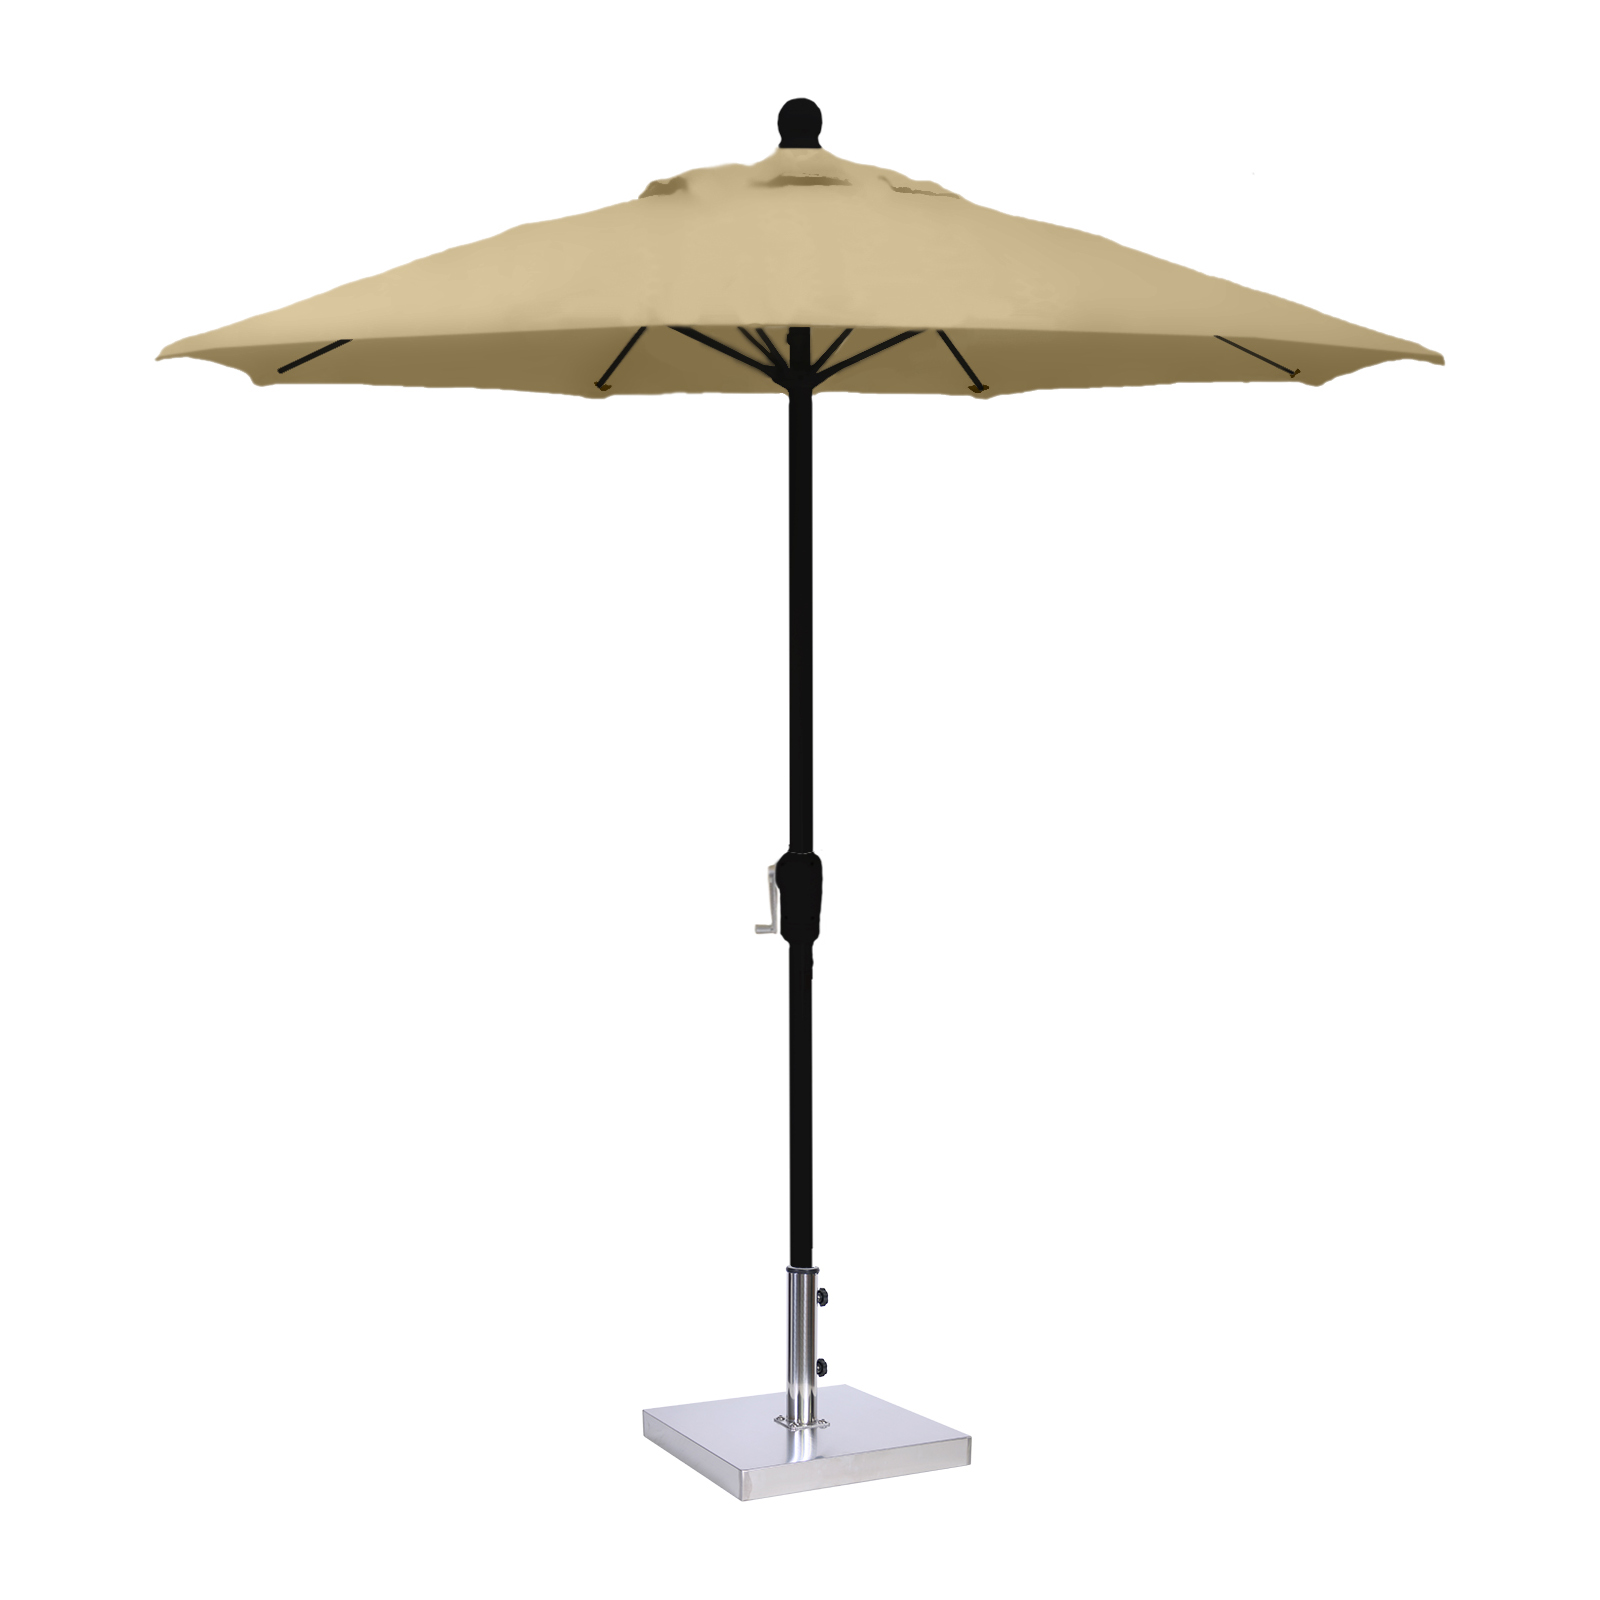 MiYu Furniture  7.5 ft Fiberglass Market Umbrella with Crank - Black Frame